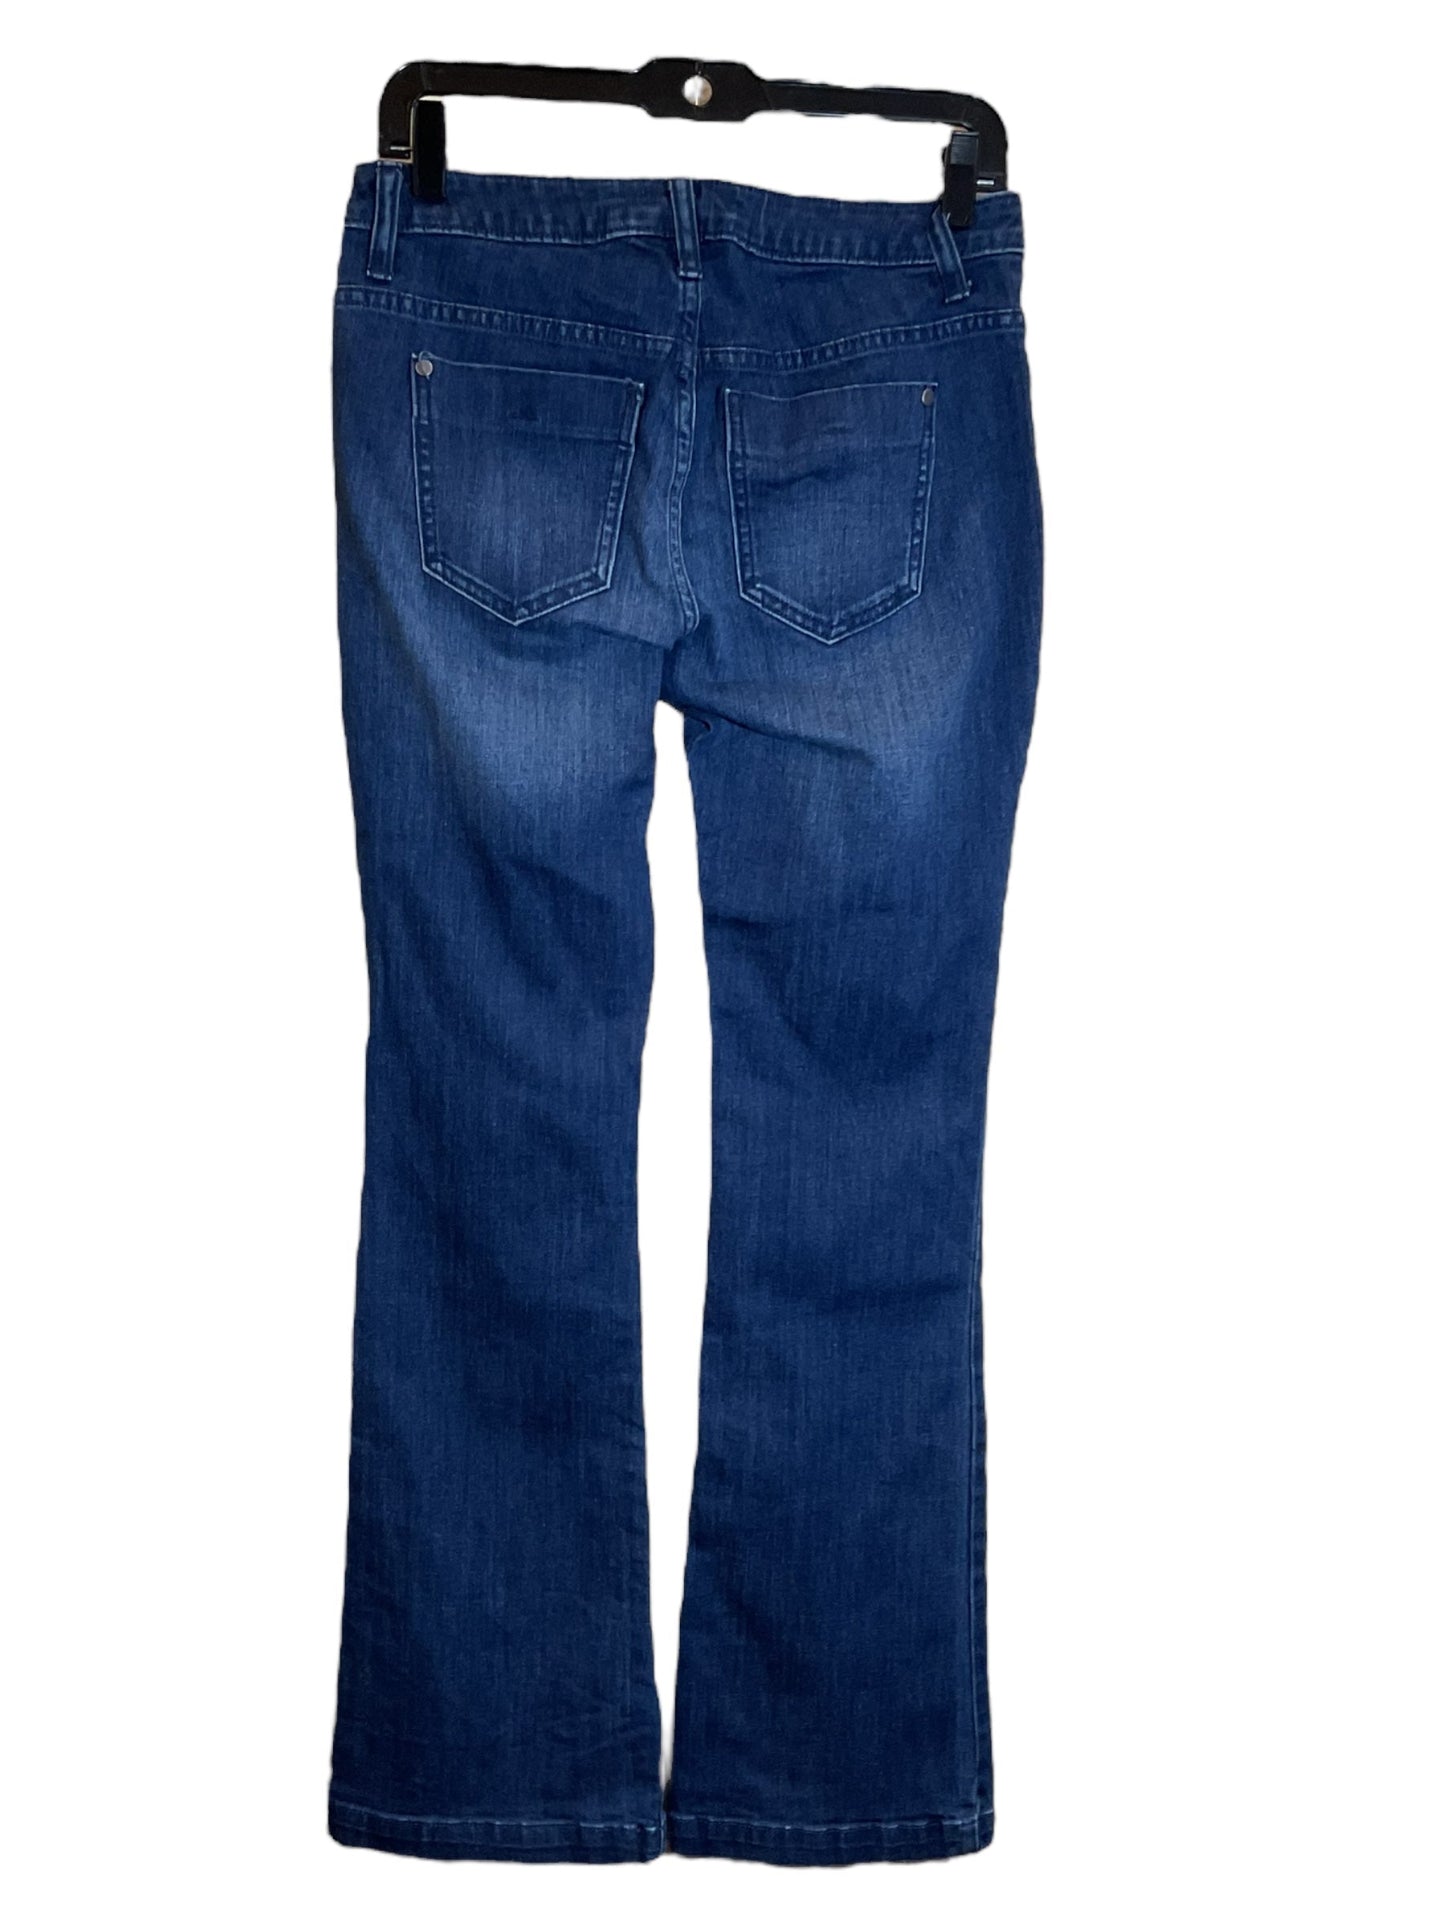 Jeans Boot Cut By Elle  Size: 2